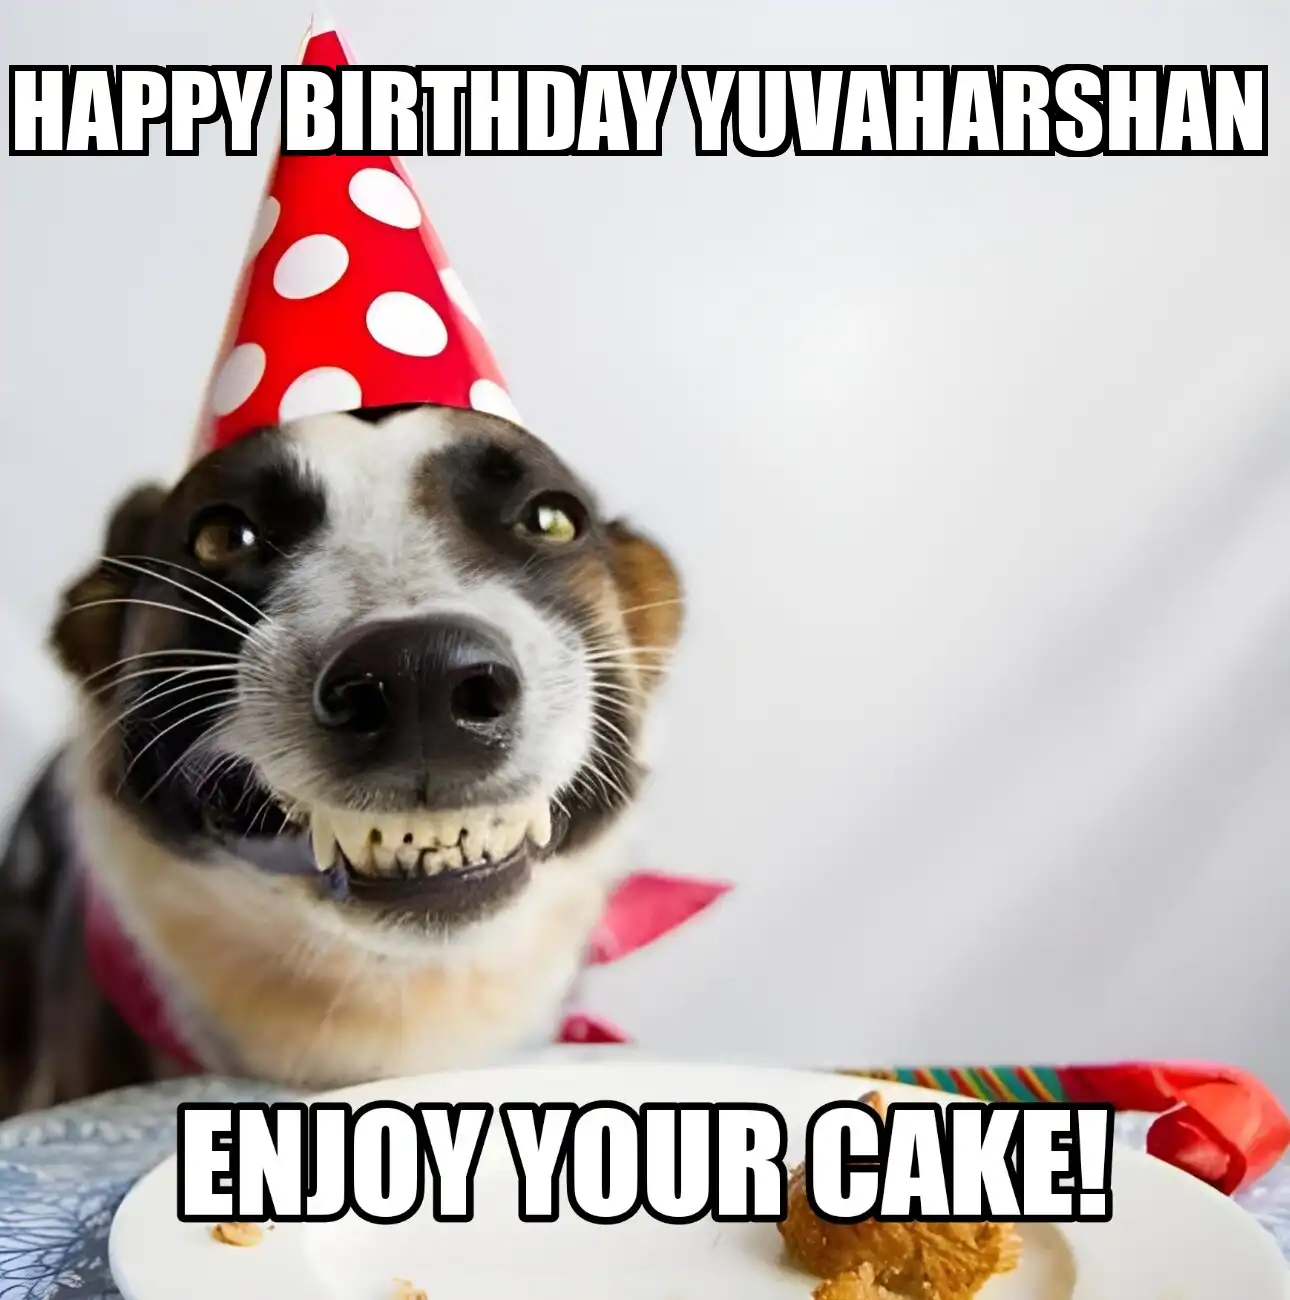 Happy Birthday Yuvaharshan Enjoy Your Cake Dog Meme